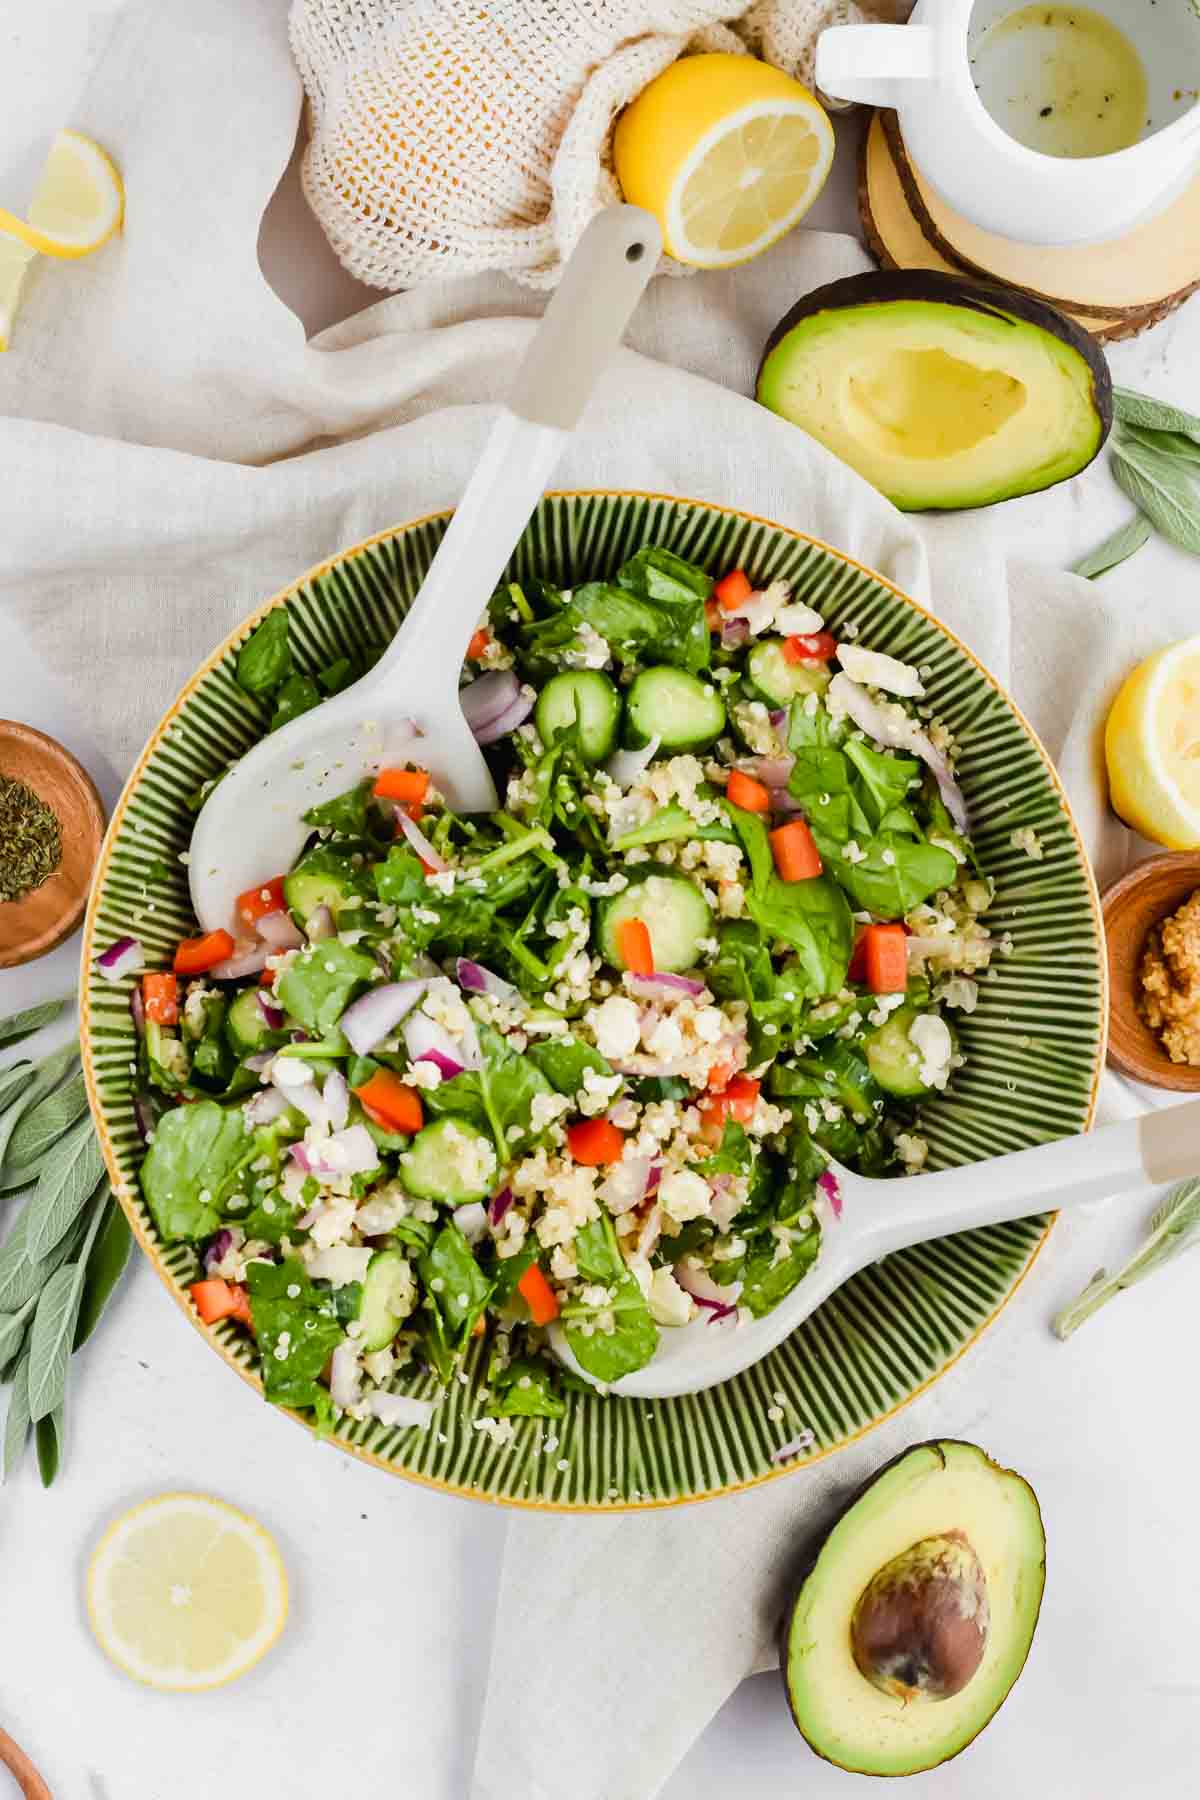 tossed salad in green salad bowl garnished with lemon slices, avocado, and olive oil.